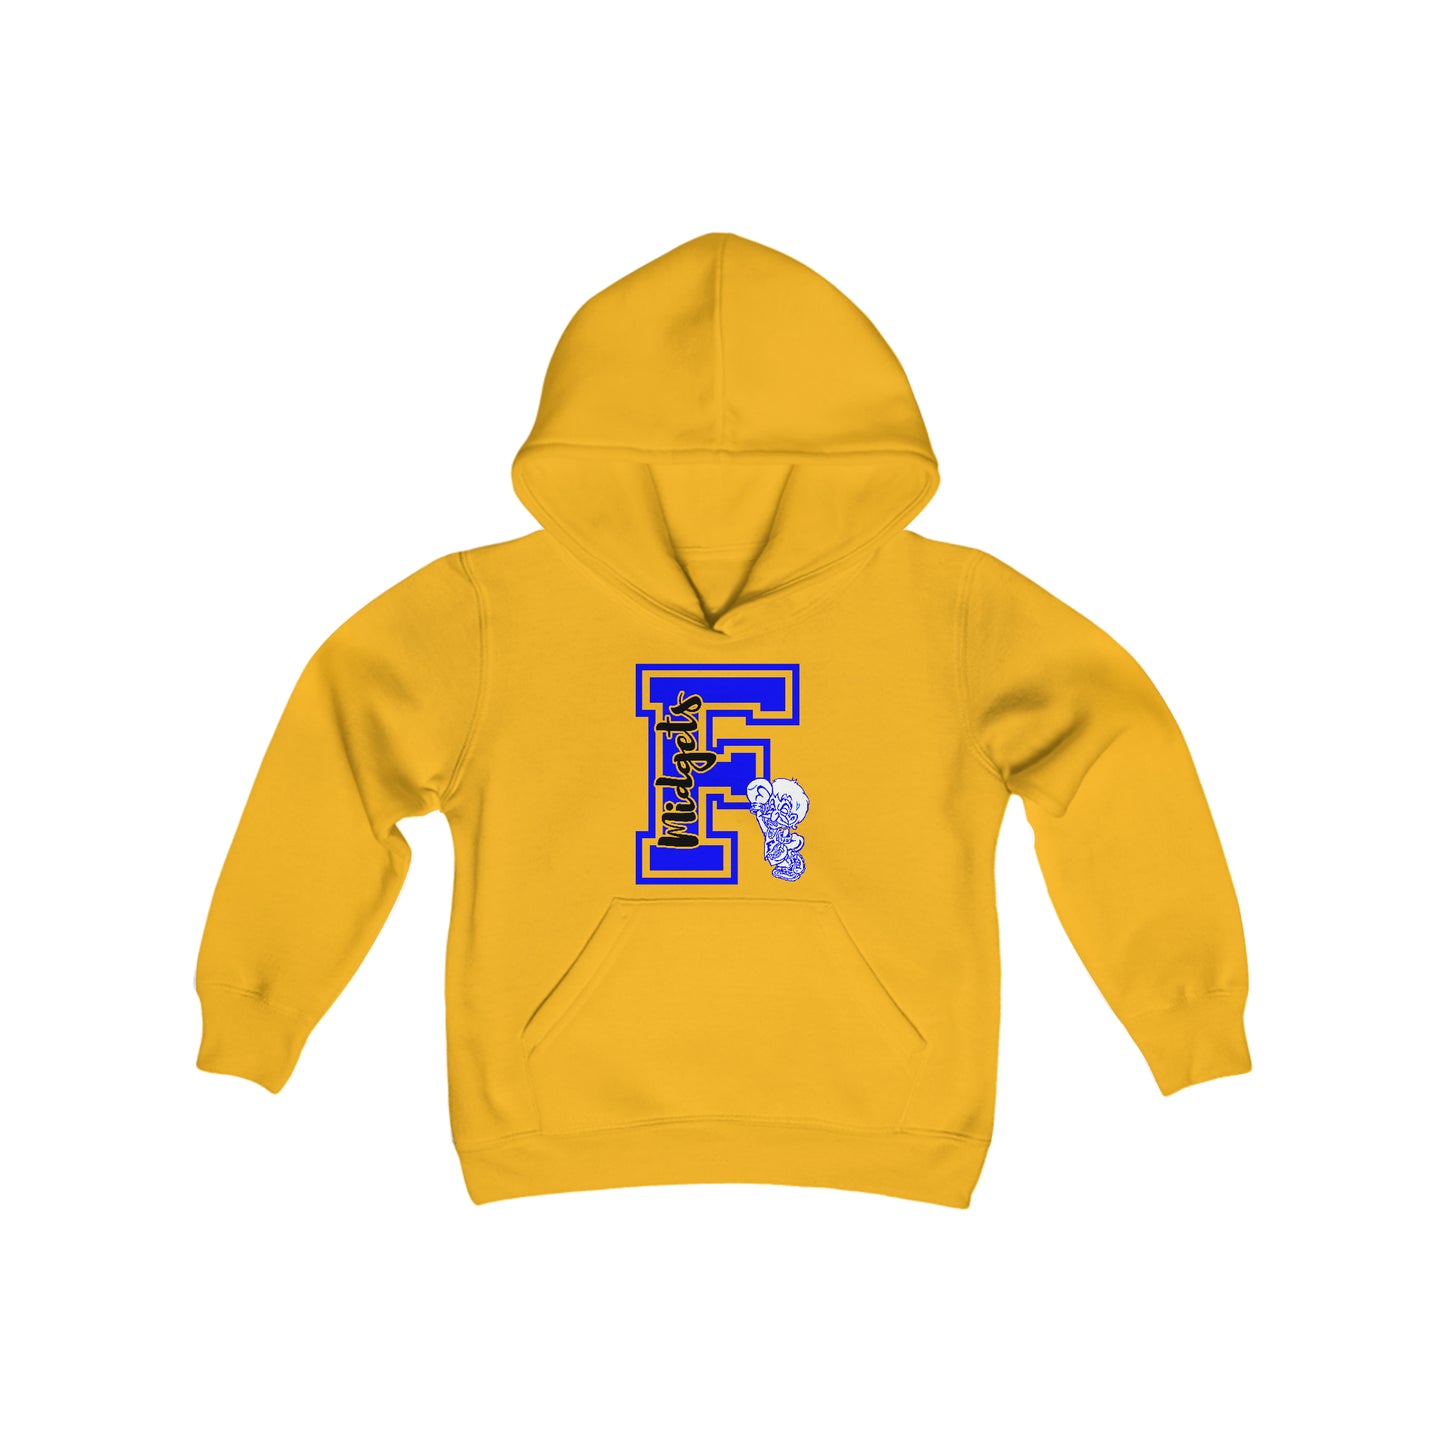 YOUTH - Give me an F - Freeburg Midgets Logo Youth Heavy Blend Hooded Sweatshirt